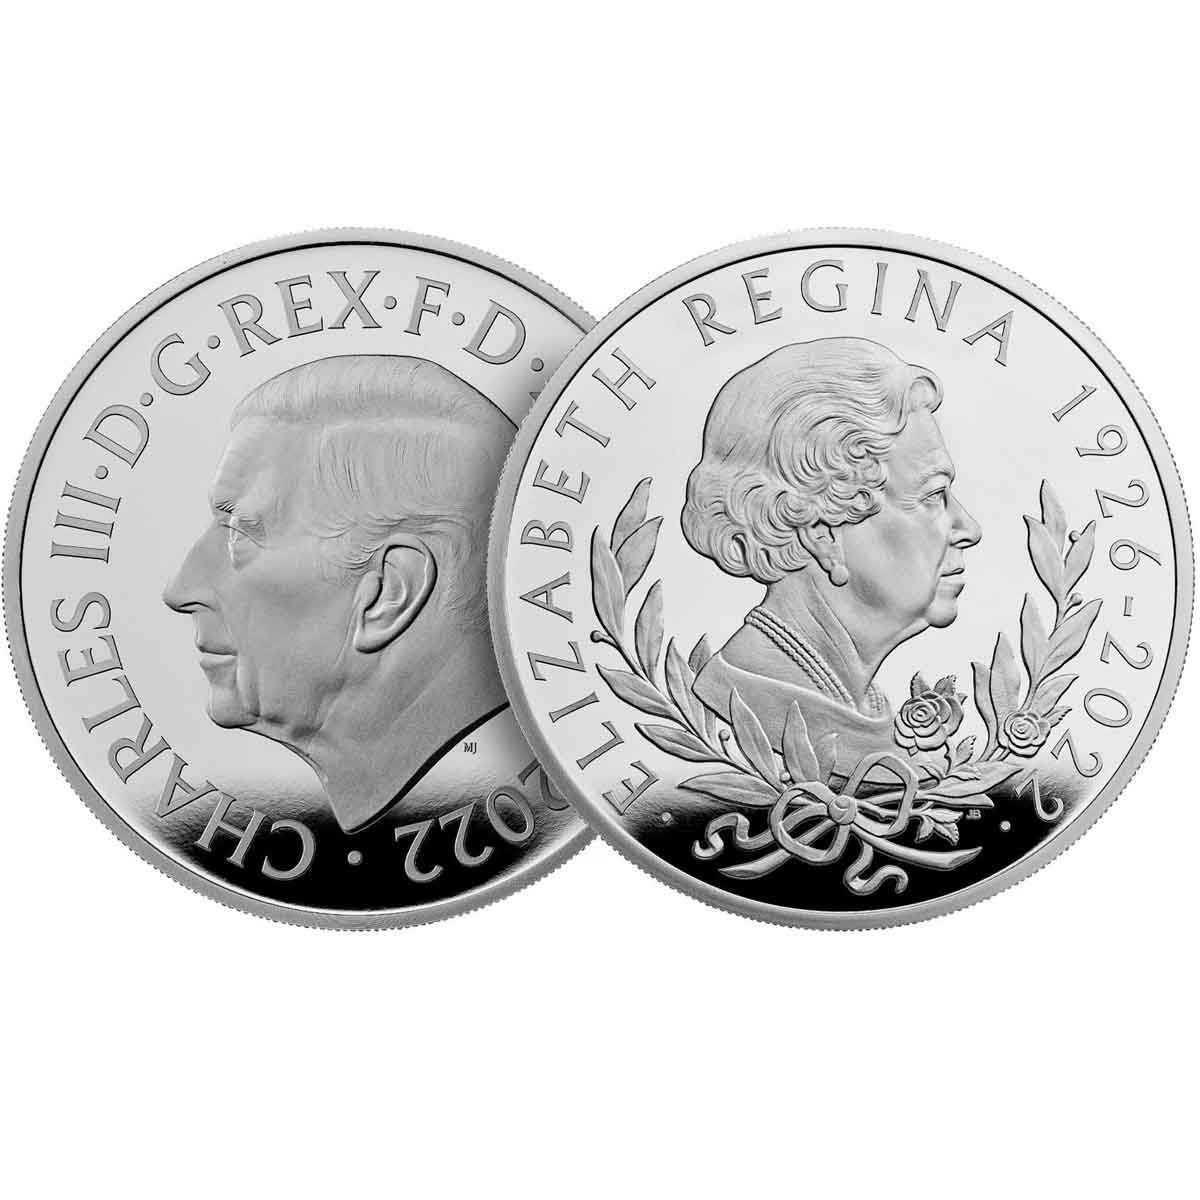 King Charles III 2022 £2 Queen Elizabeth II Tribute 1oz Silver Proof Coin